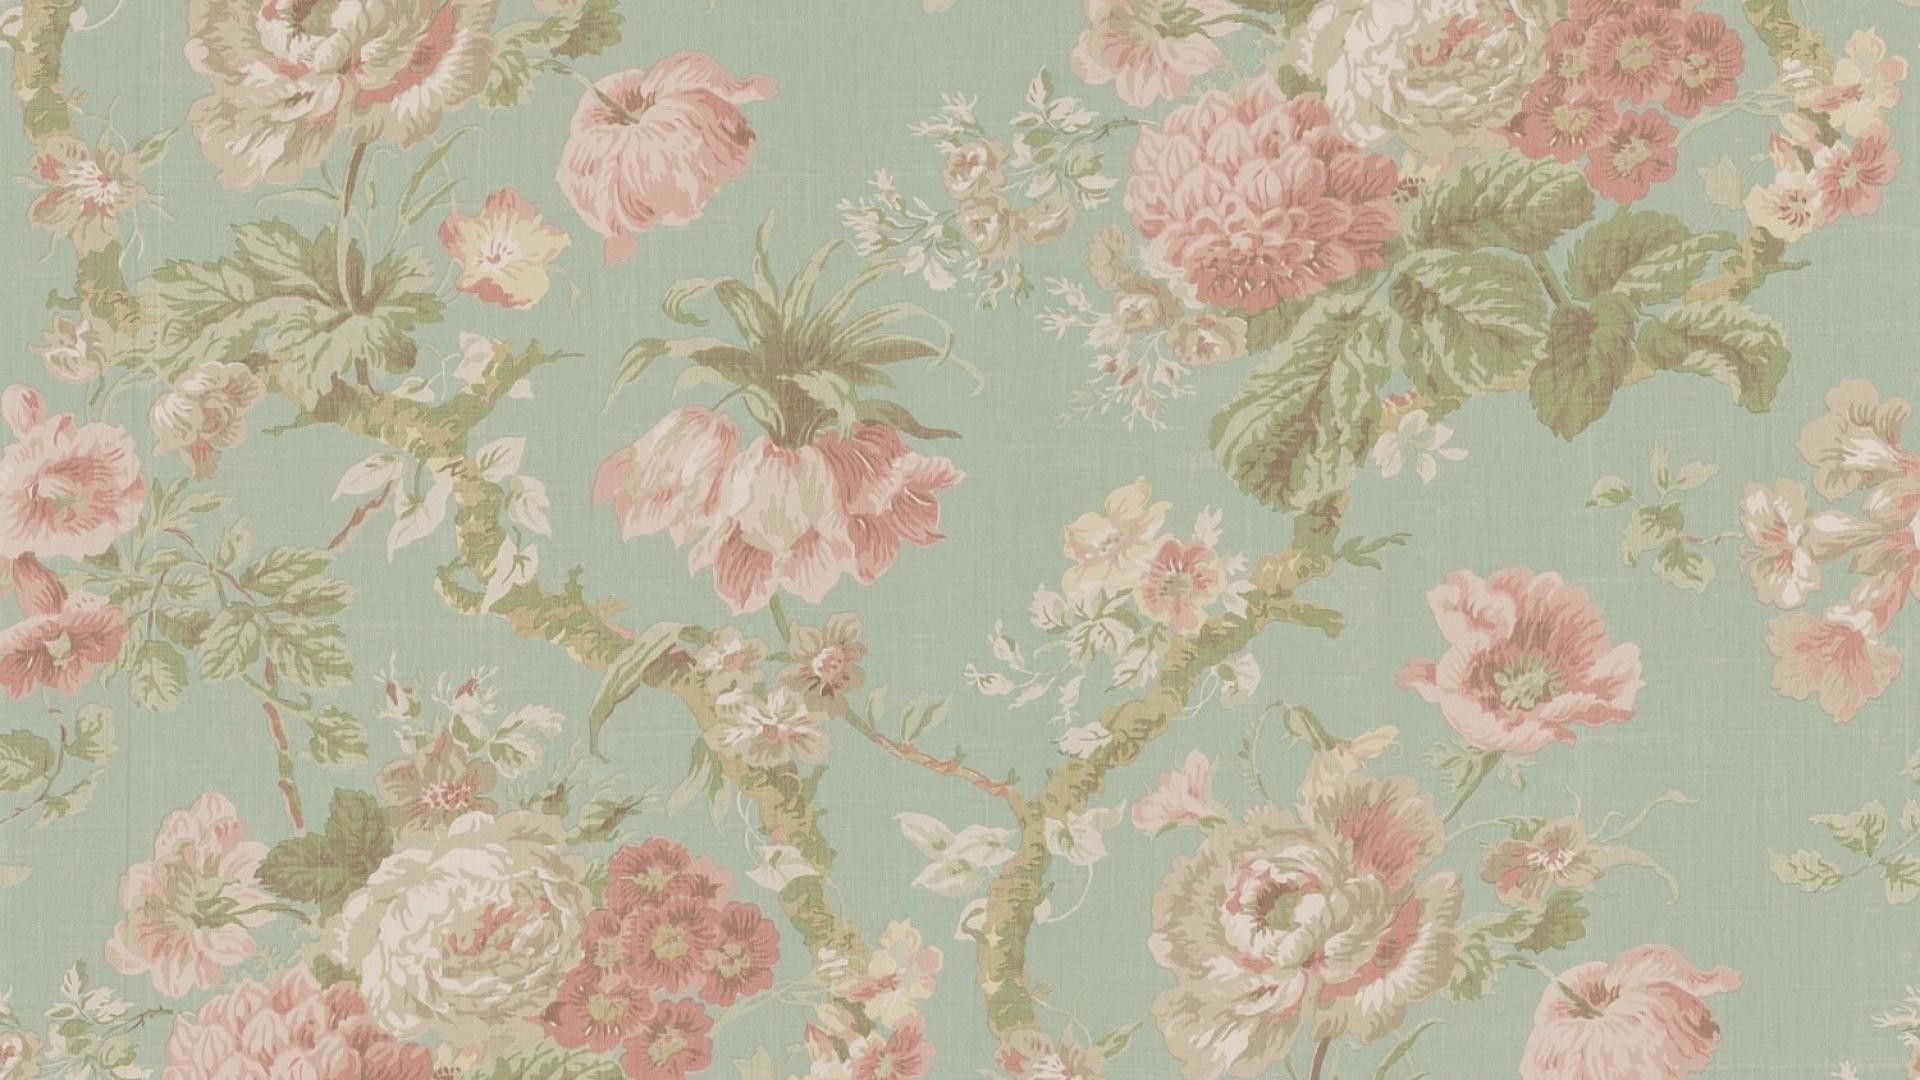 1920x1080 Wallpapers For \u003e Retro Floral Desktop Wallpaper | Vintage flower backgrounds, Vintage flowers wallpaper, Vintage floral wallpapers